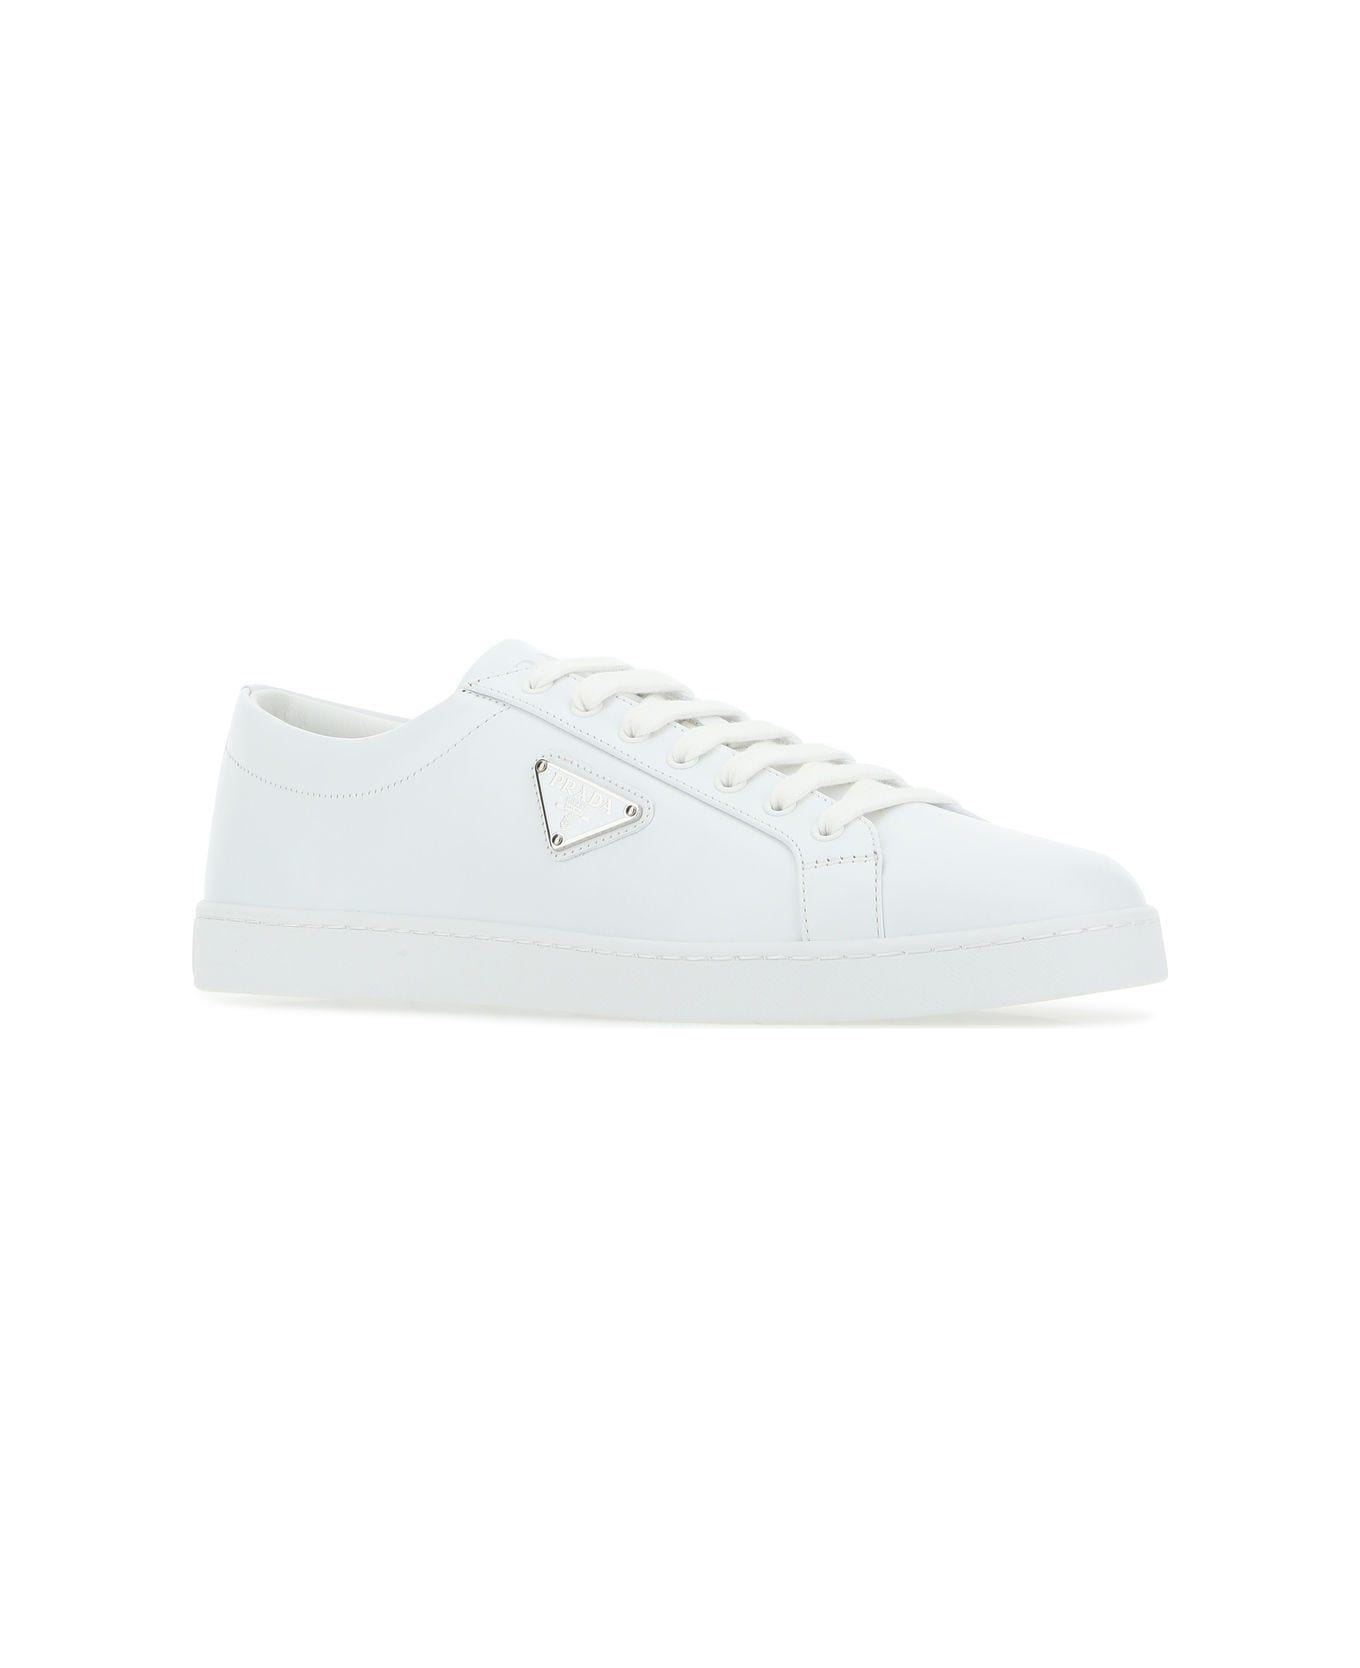 Prada White Leather Sneakers - Bianco スニーカー